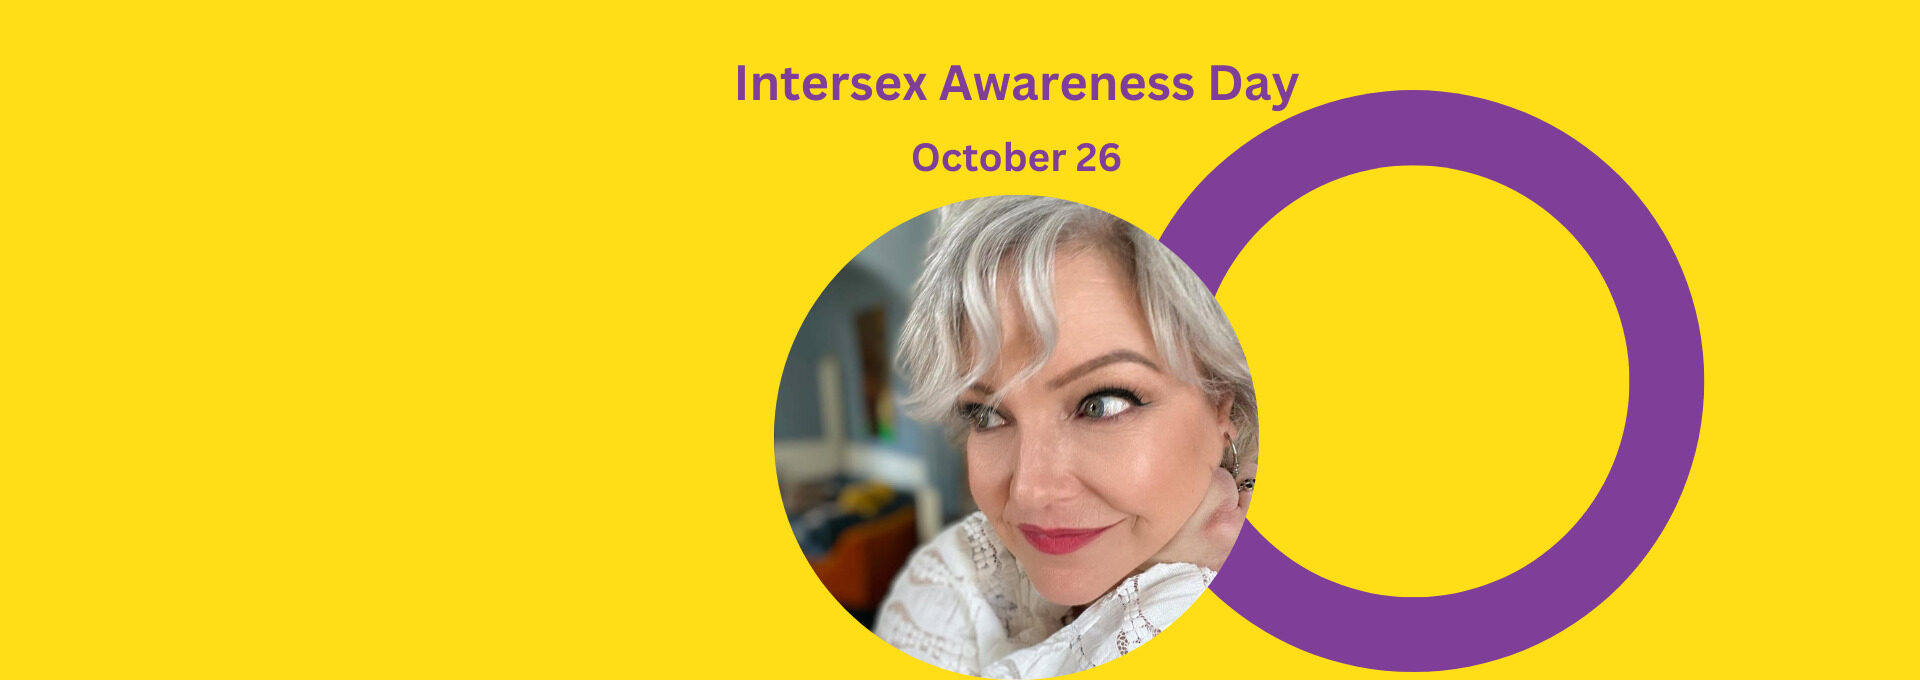 Intersex Awareness Day       